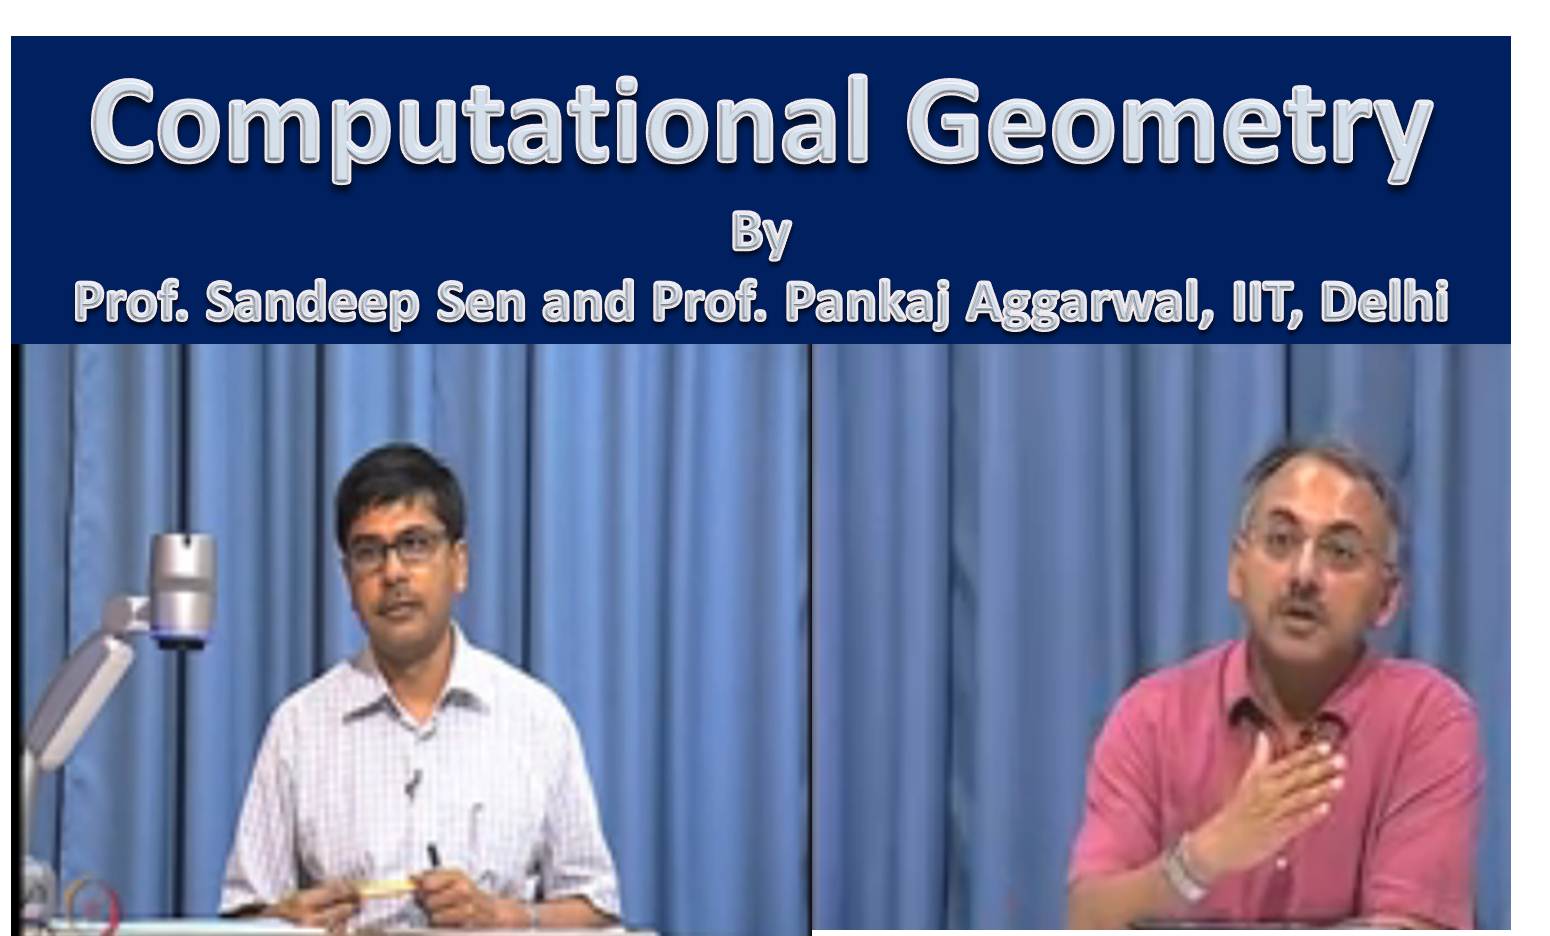 http://study.aisectonline.com/images/SubCategory/Computational Geometry by Prof. Sandeep Sen and Prof. Pankaj Aggarwal, IIT Delhi..jpg